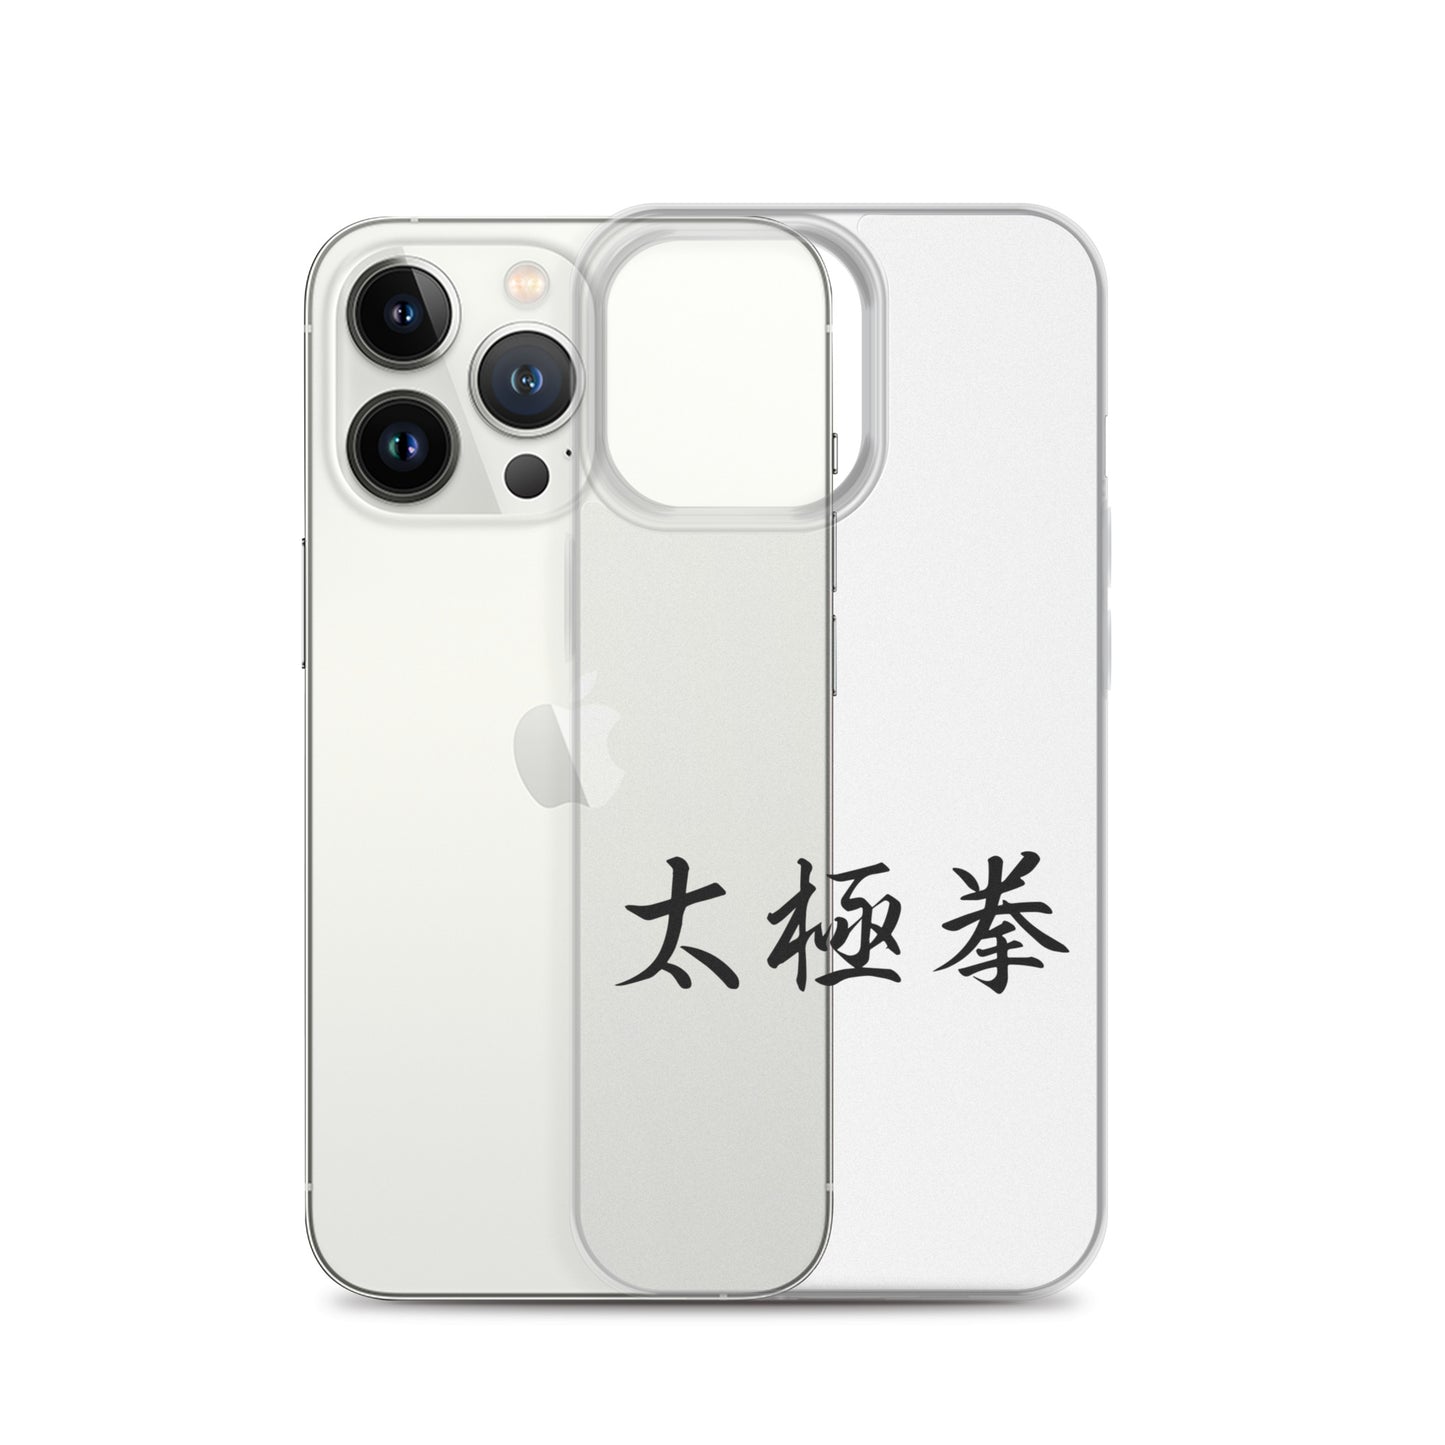 Tai Chi Chuan iPhone Case